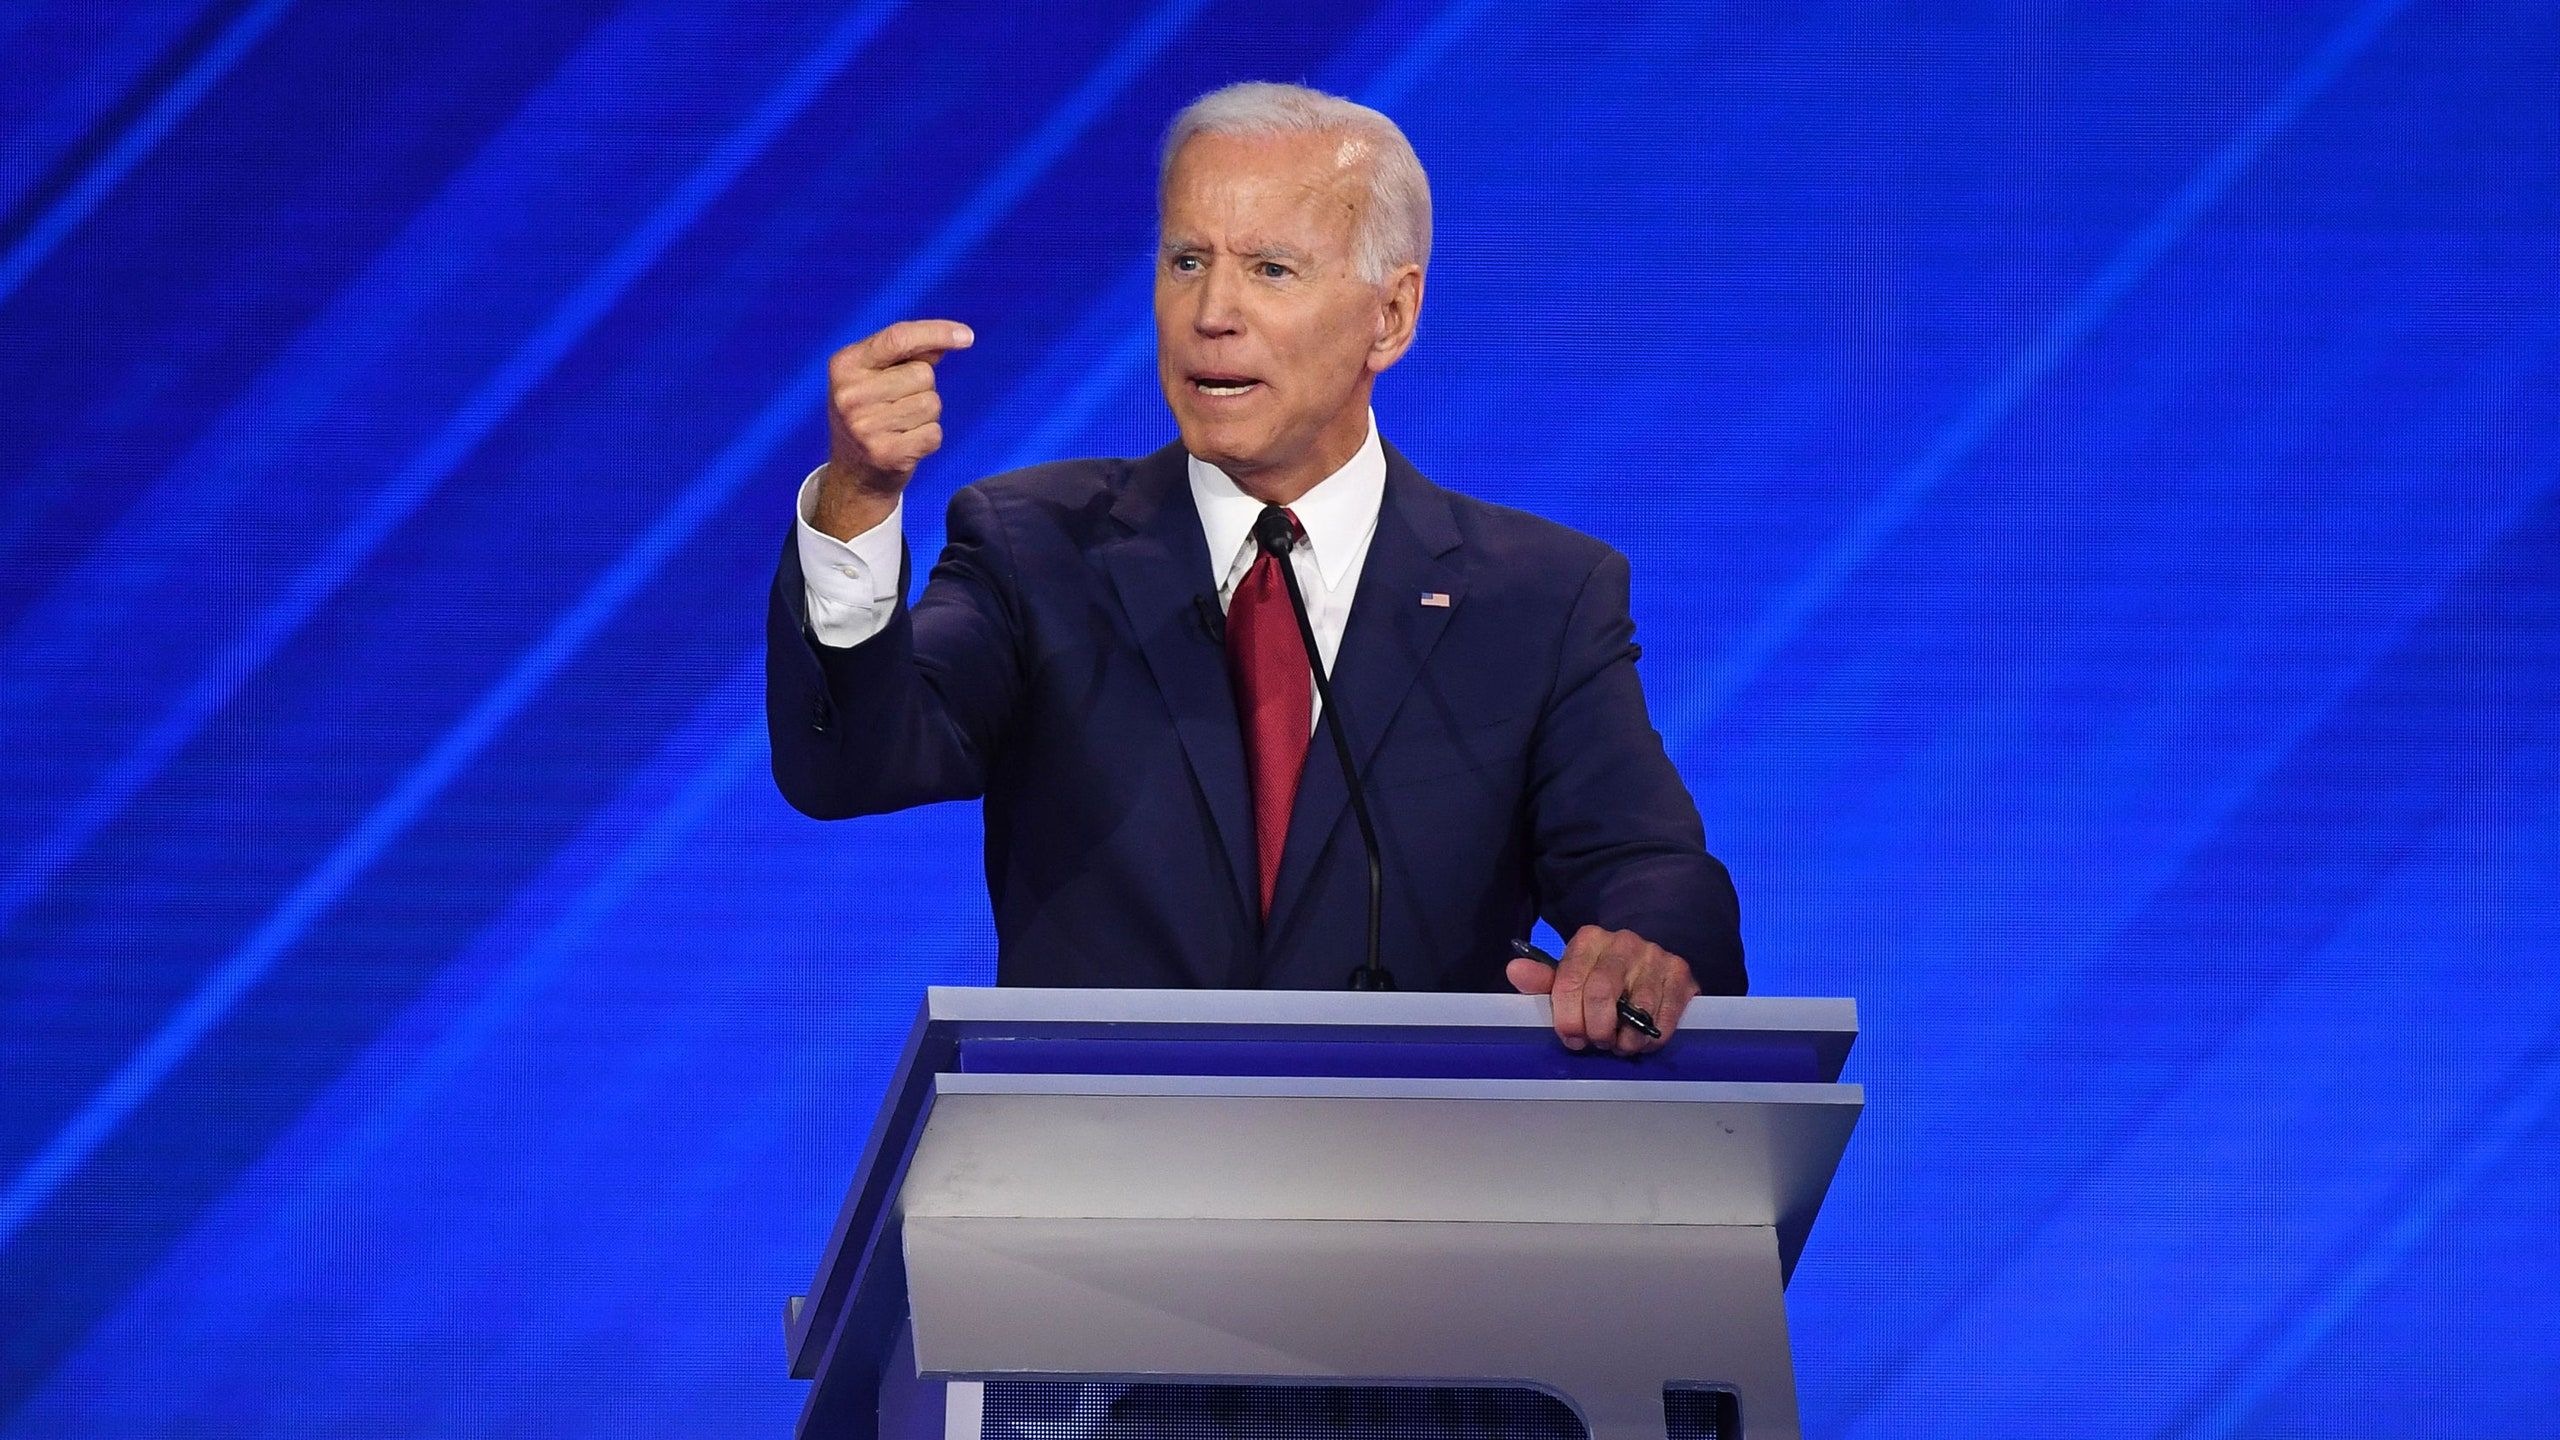 Joe Biden's Democratic Debate Performance Raises Serious Questions